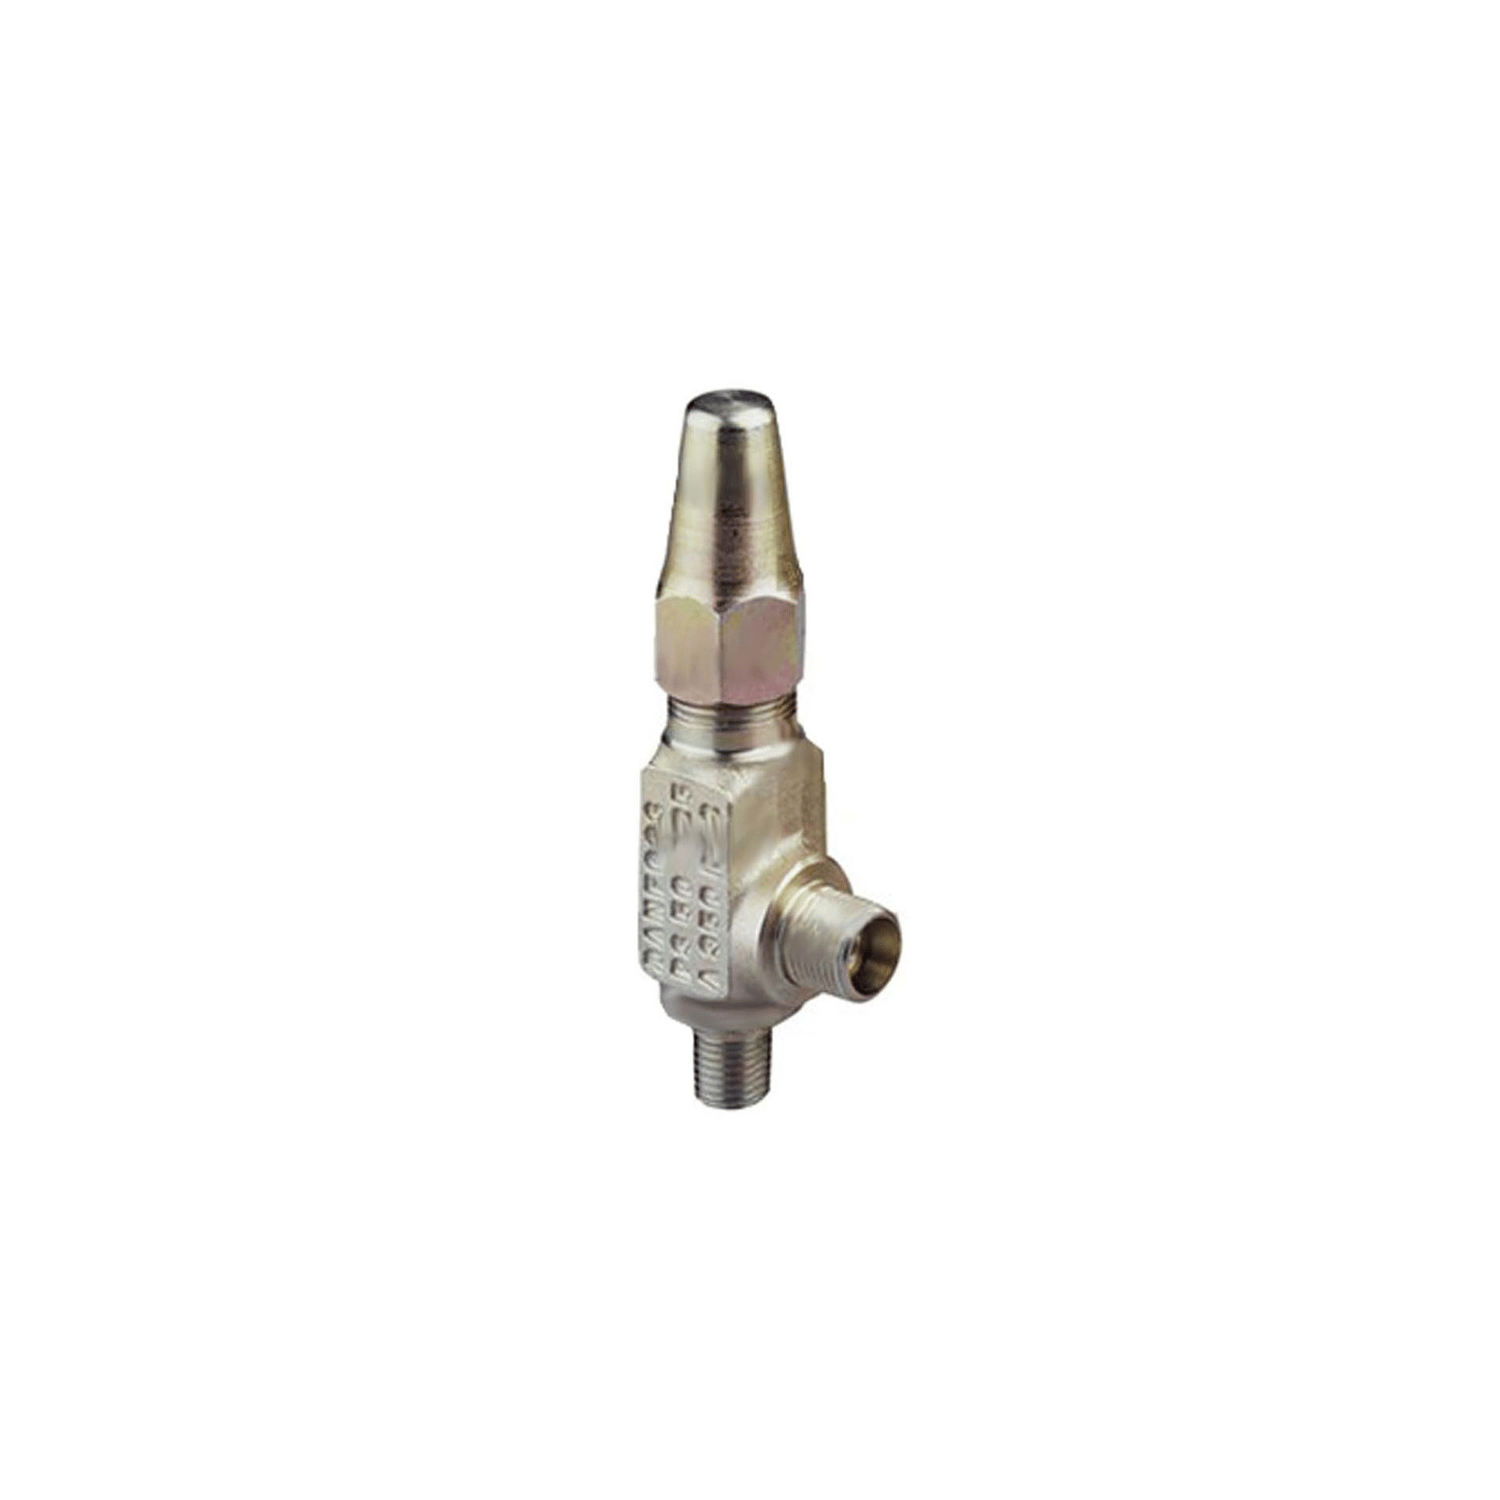 Shut-off valve SNV-ST Danfoss, 3/8 "NPT, R717, CO2